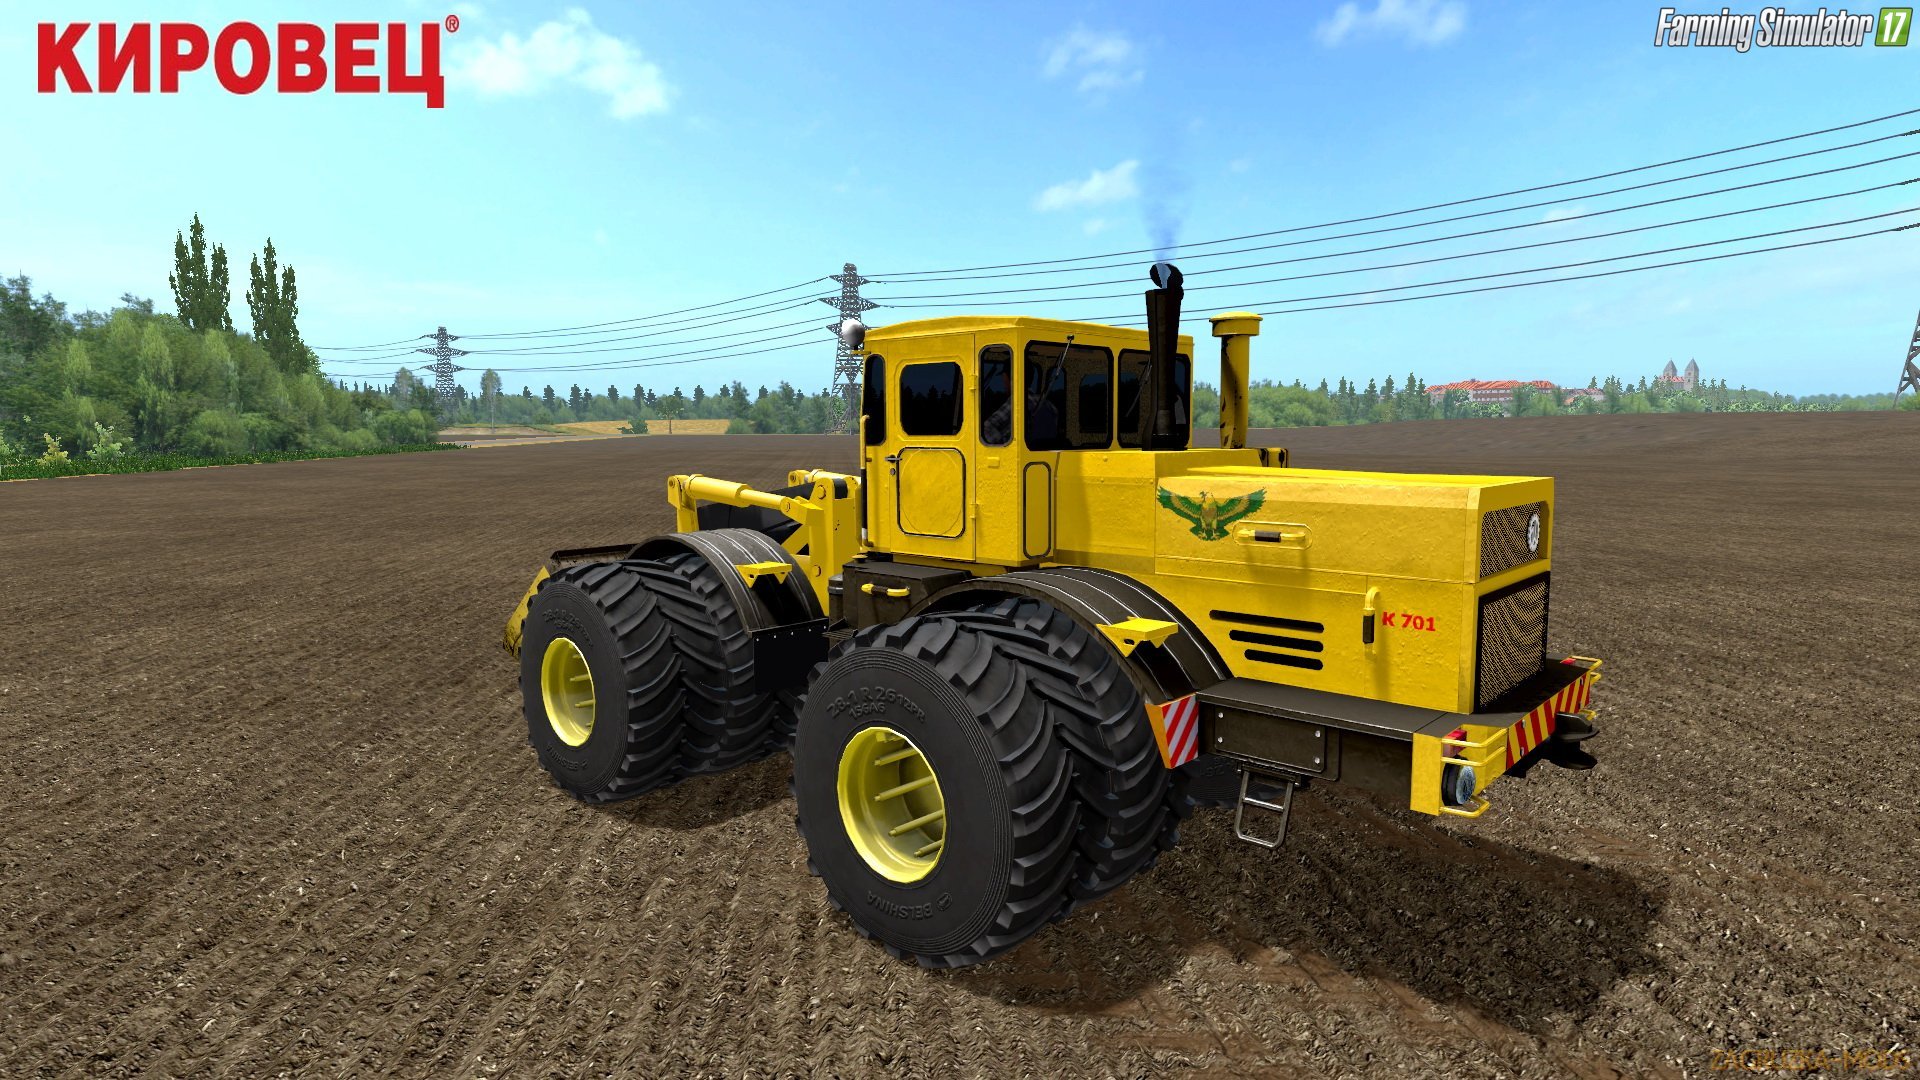 Tractor Kirovets K-700A v2.1 for FS 17